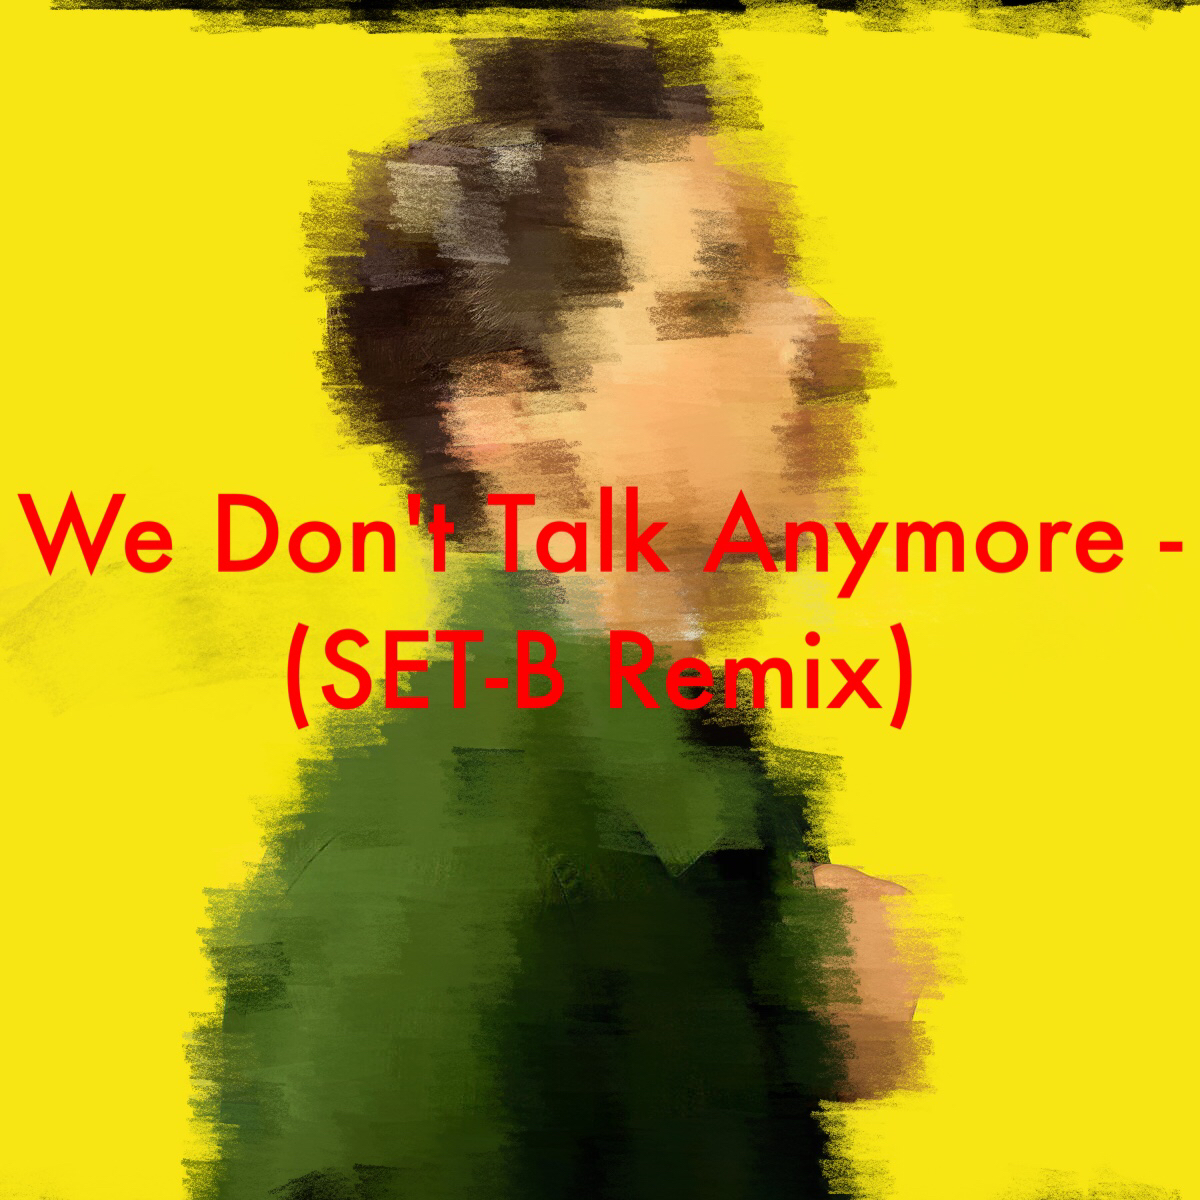 We Don't Talk Anymore - (SET-B Remix)